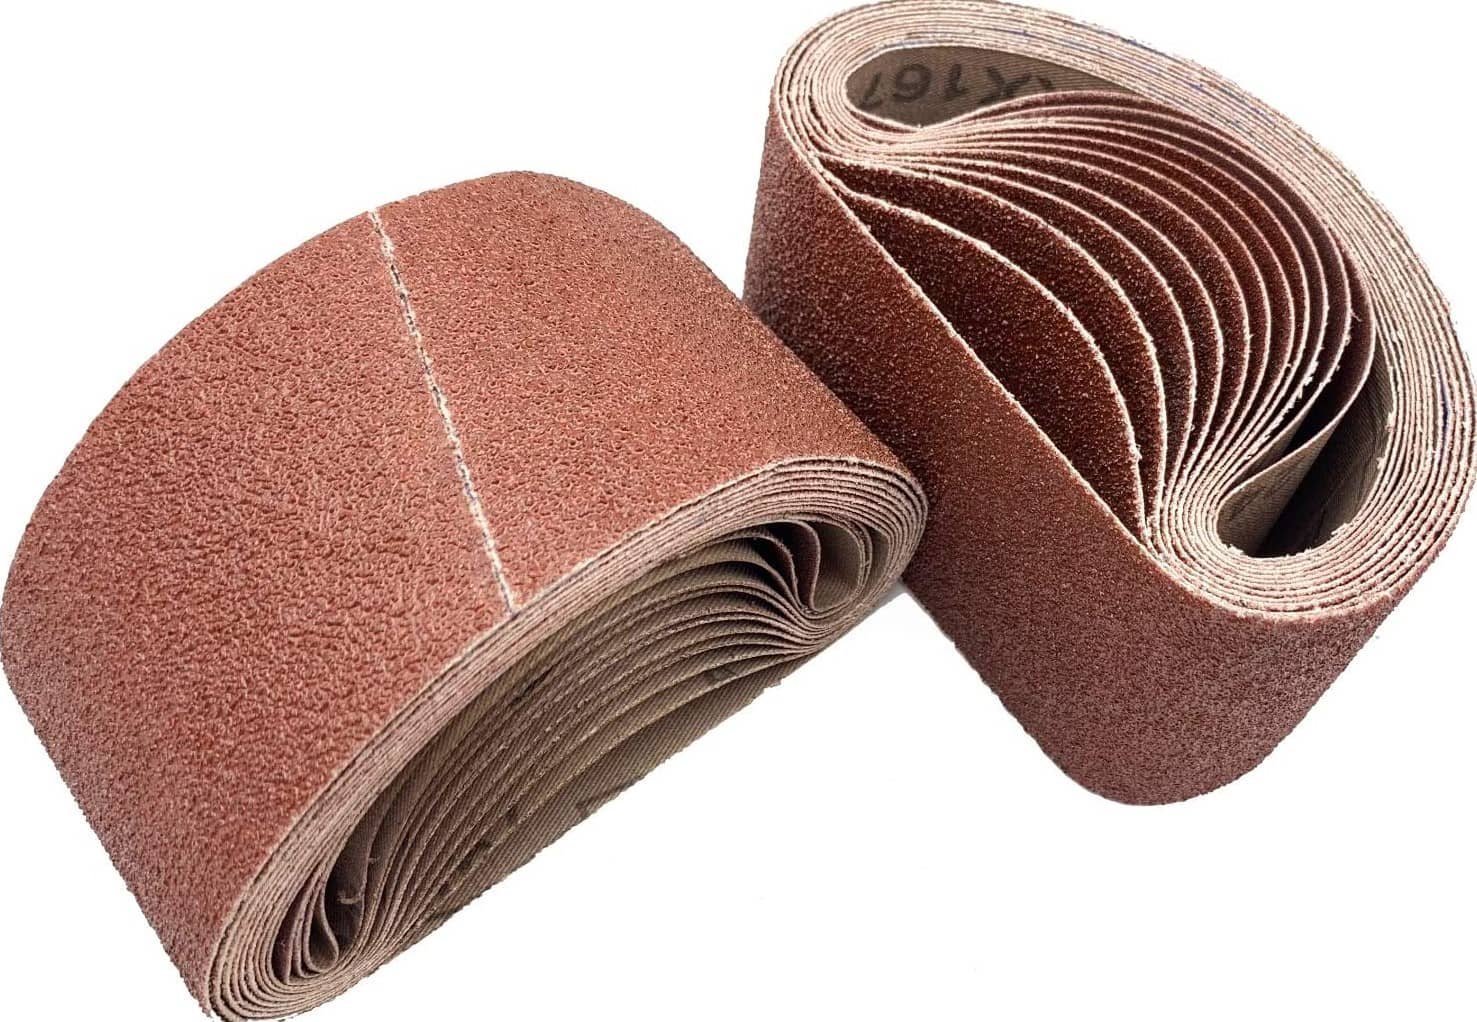 Toakyid Abrasive Sanding Belts